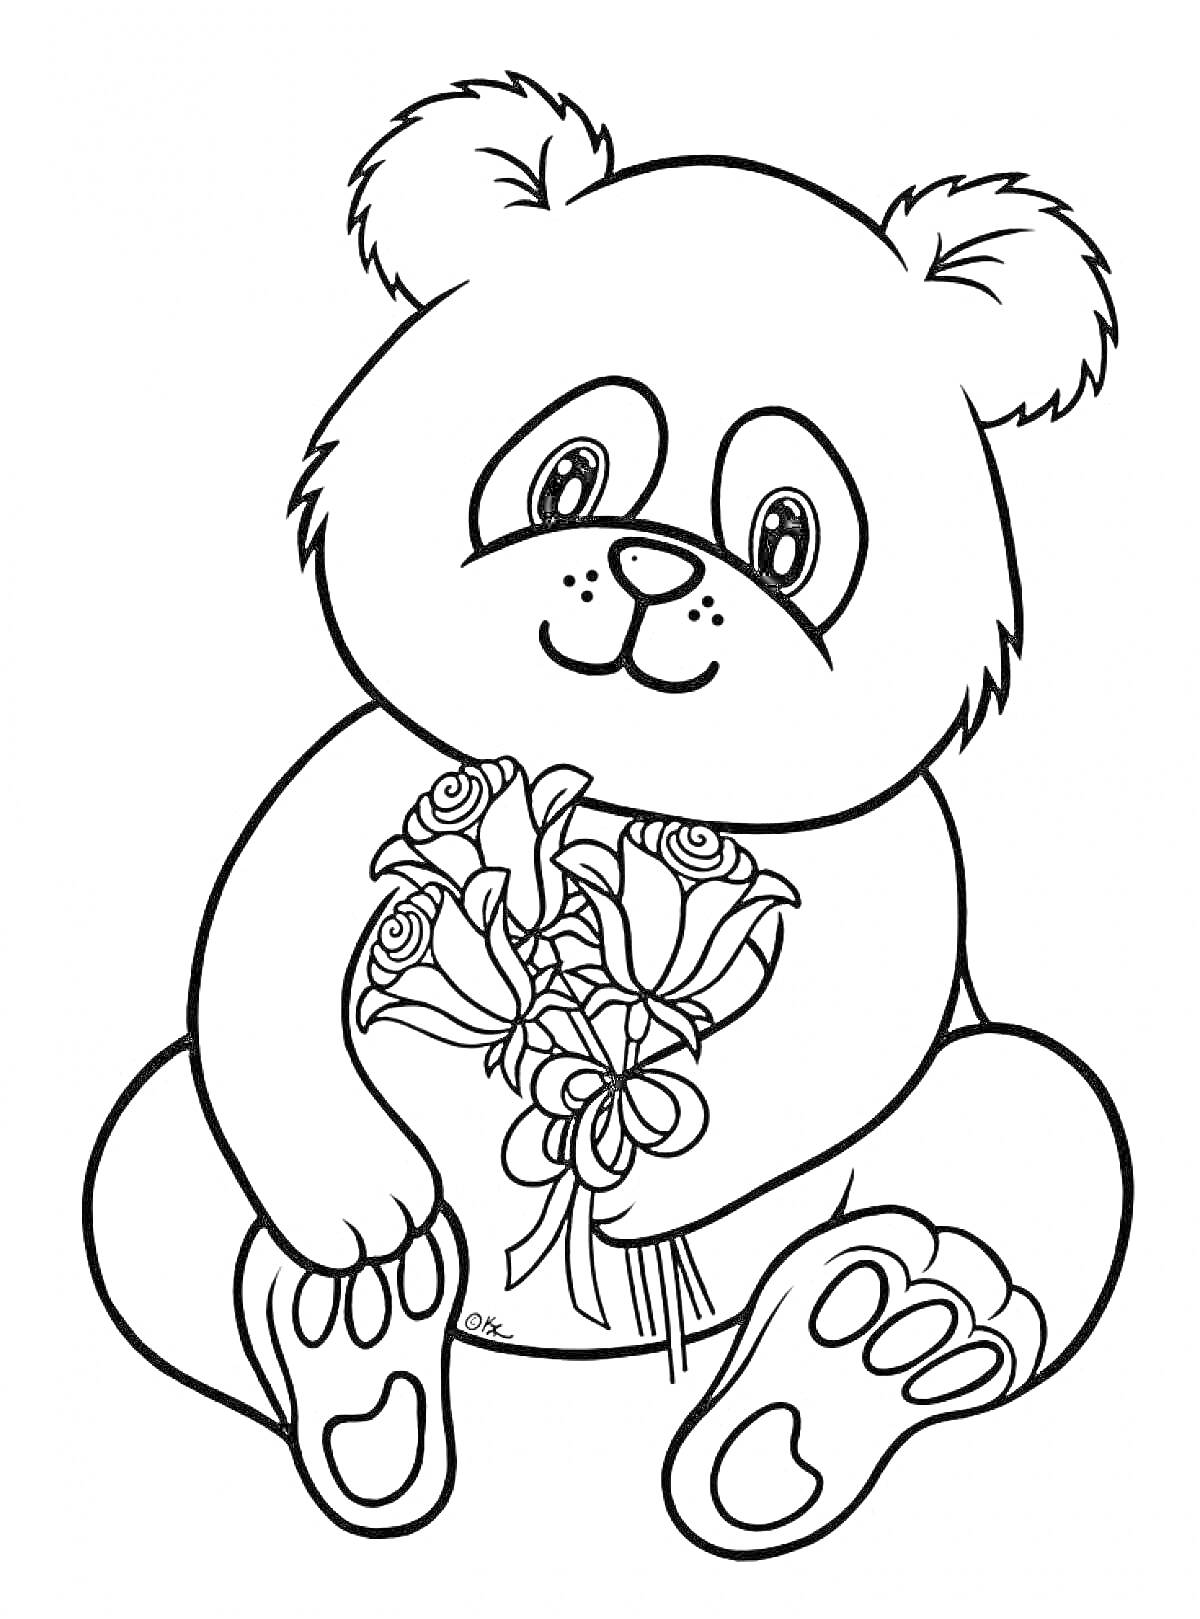 Раскраска Панда с букетом роз